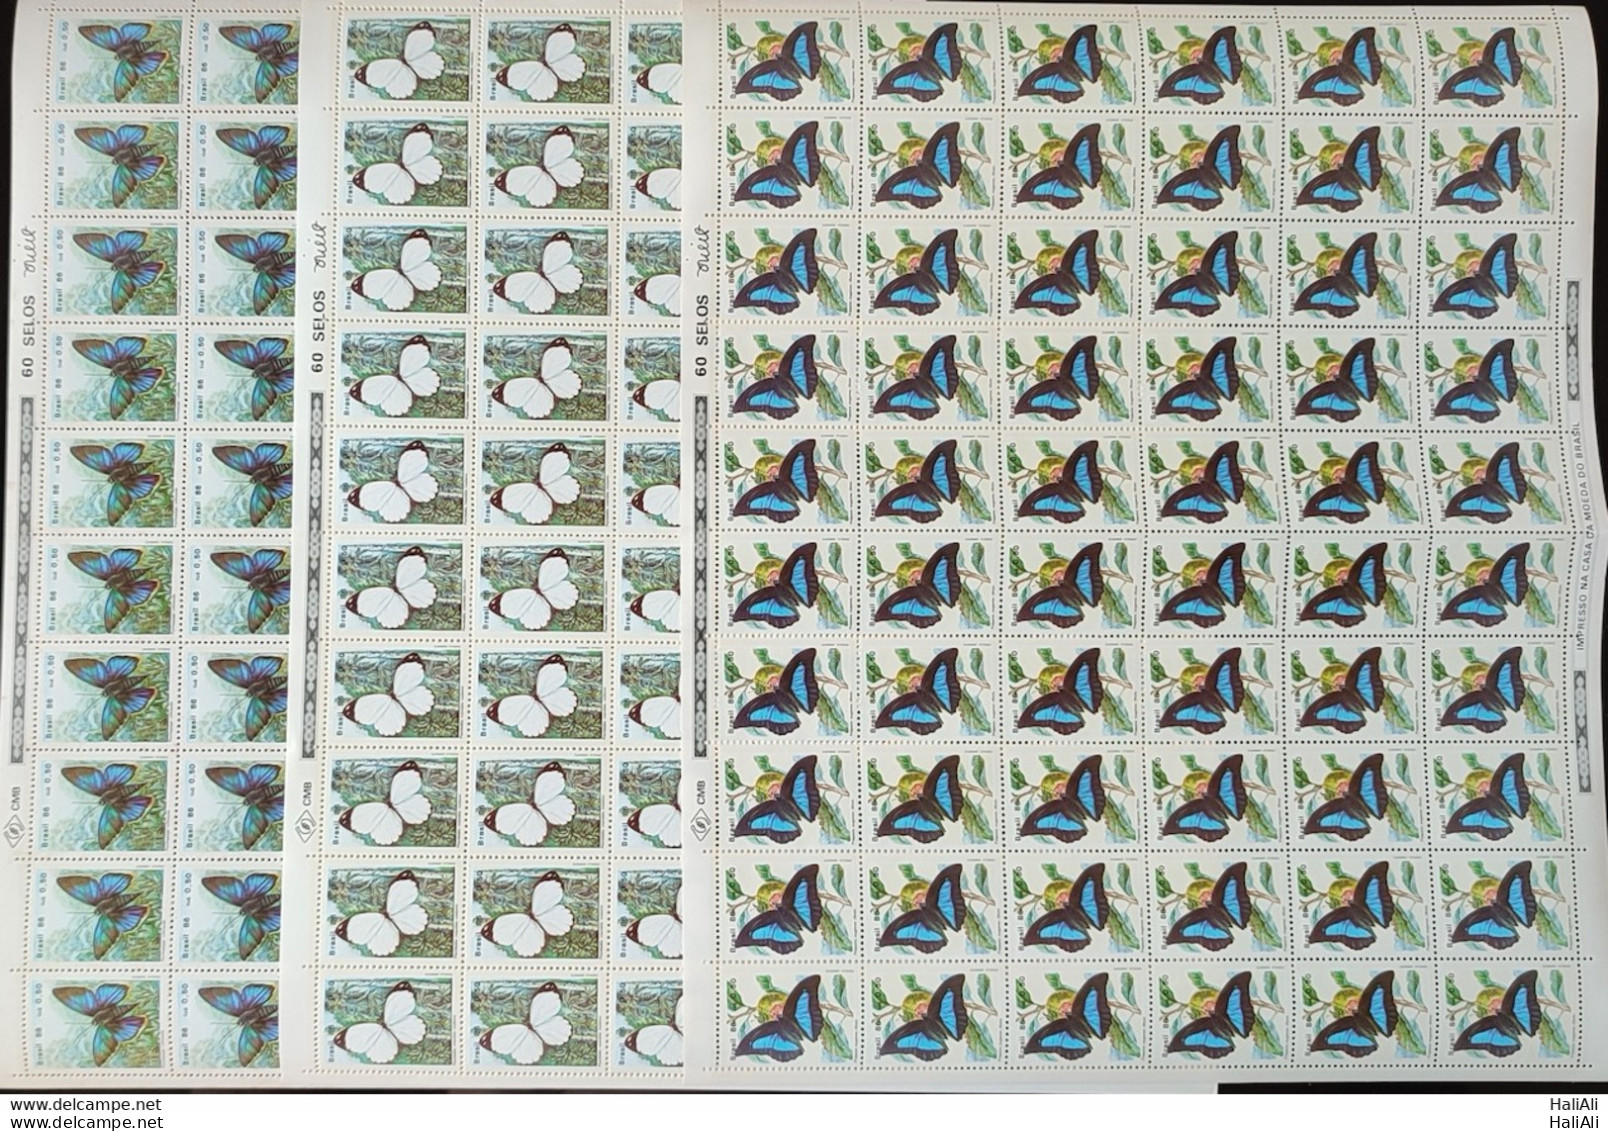 C 1512 Brazil Stamp Butterfly Insects 1986 Sheet Complete Series.jpg - Ongebruikt